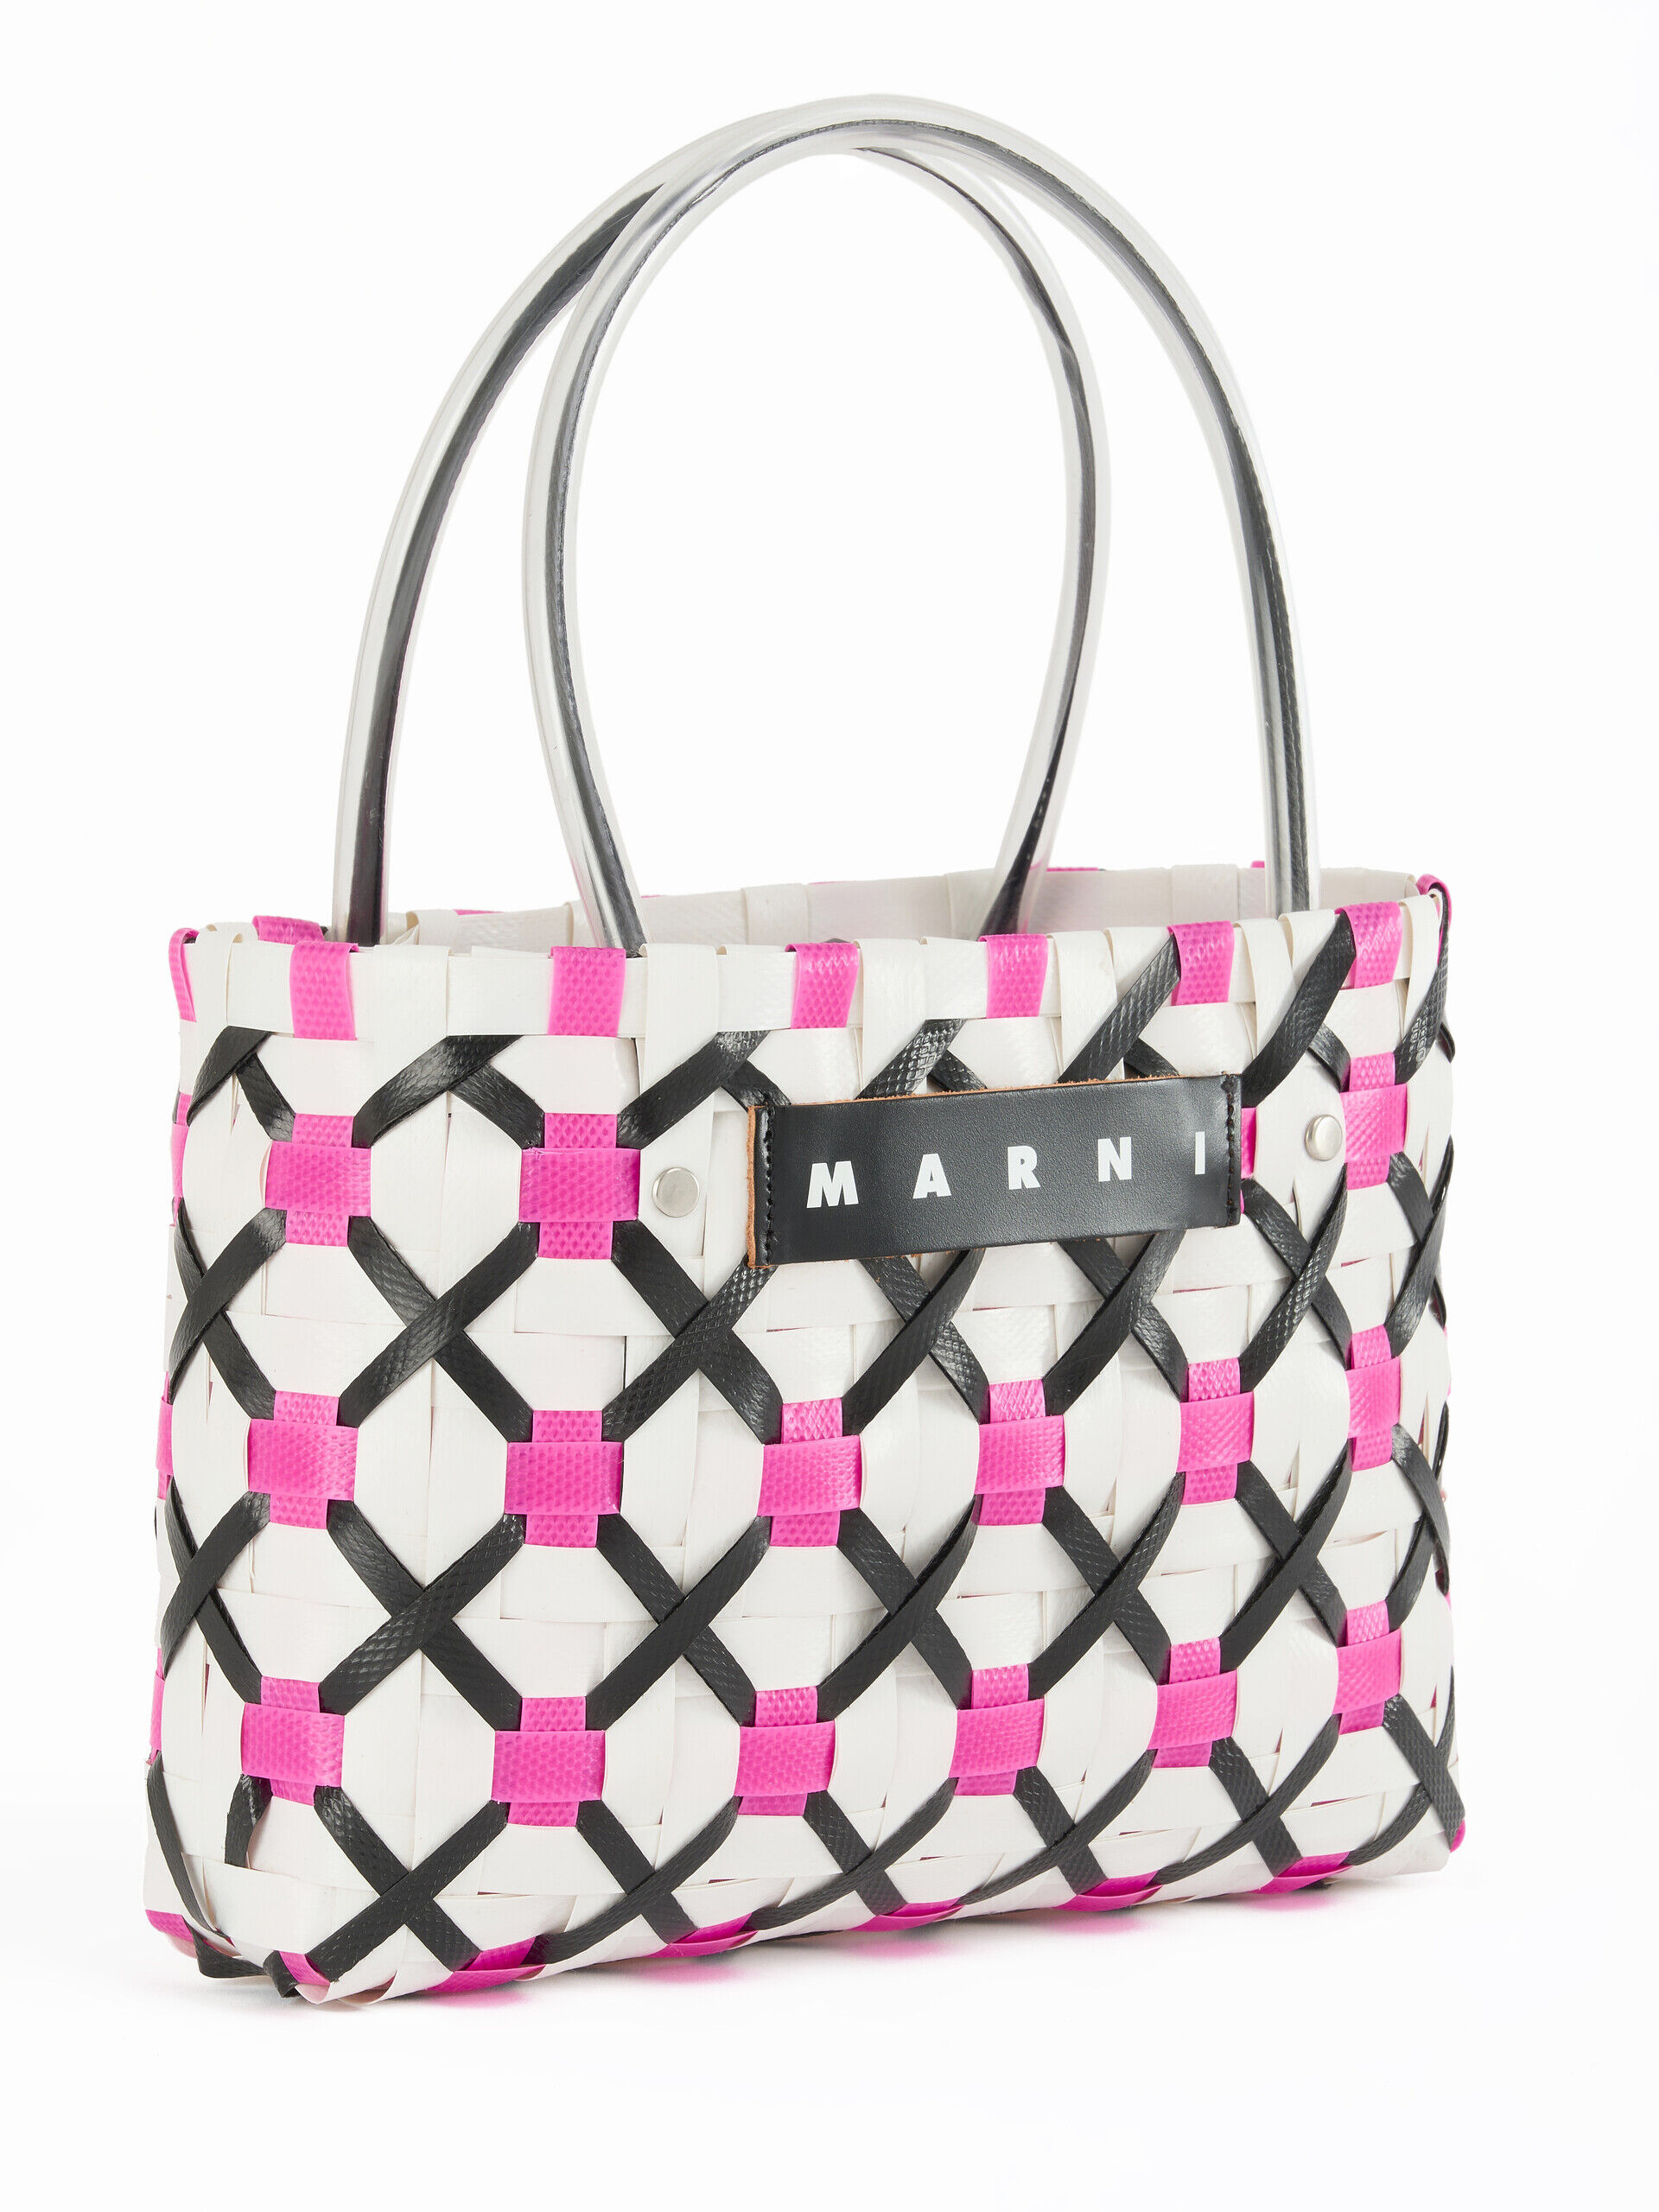 White and pink criss-cross MARNI MARKET tote bag | Marni